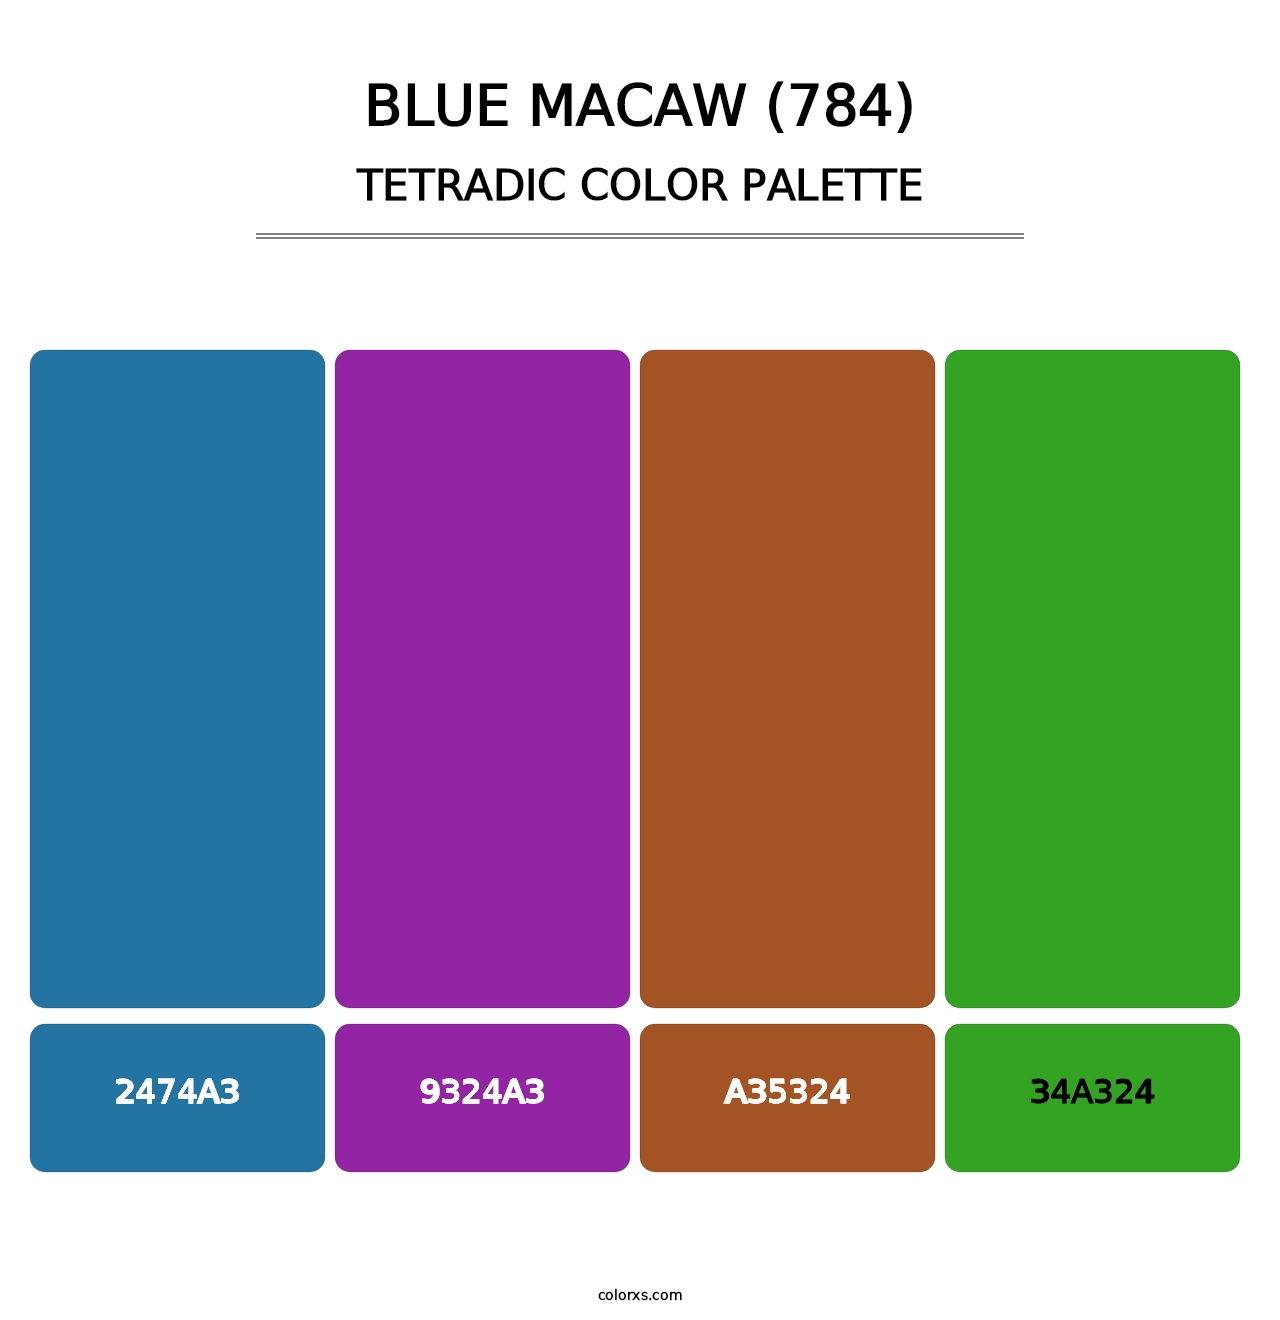 Blue Macaw (784) - Tetradic Color Palette